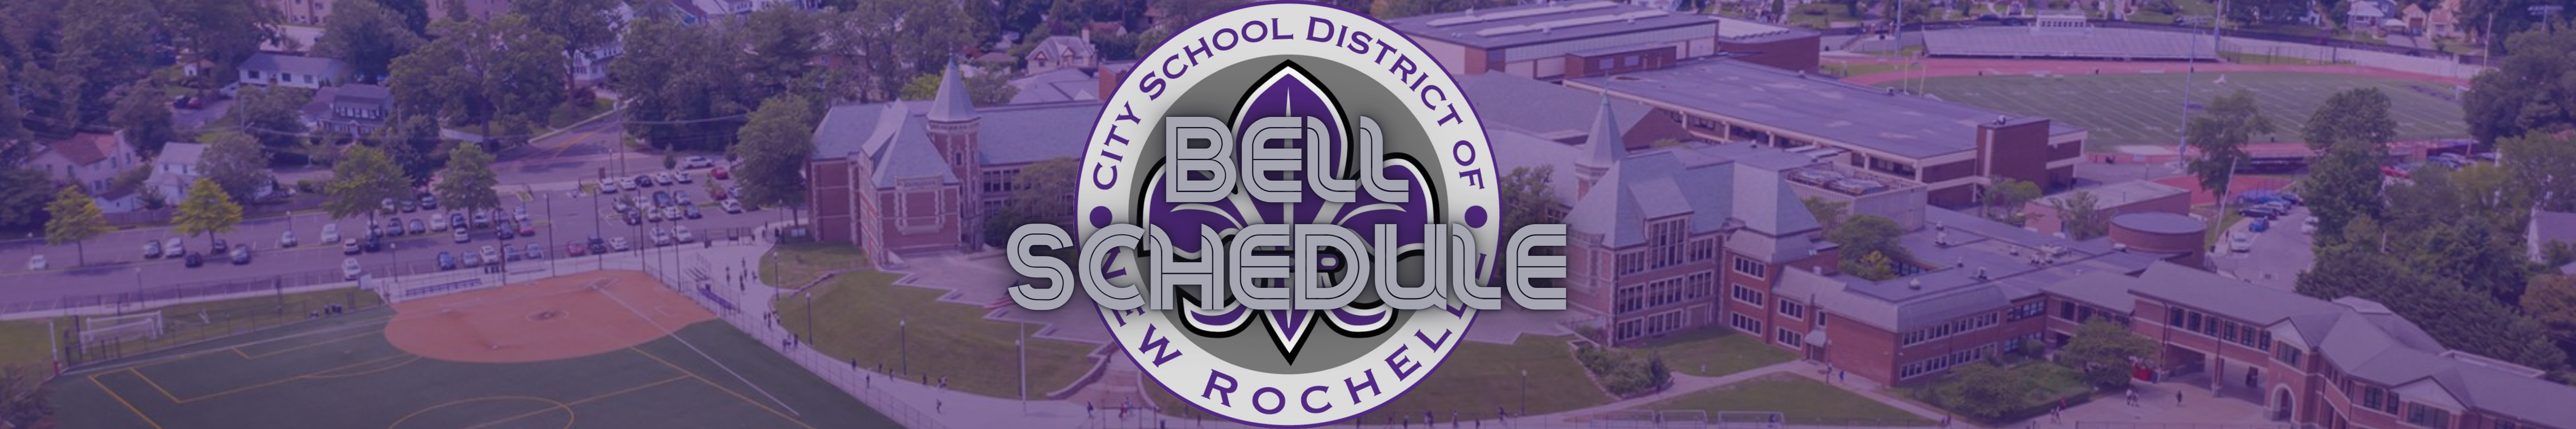 Bell Schedule banner